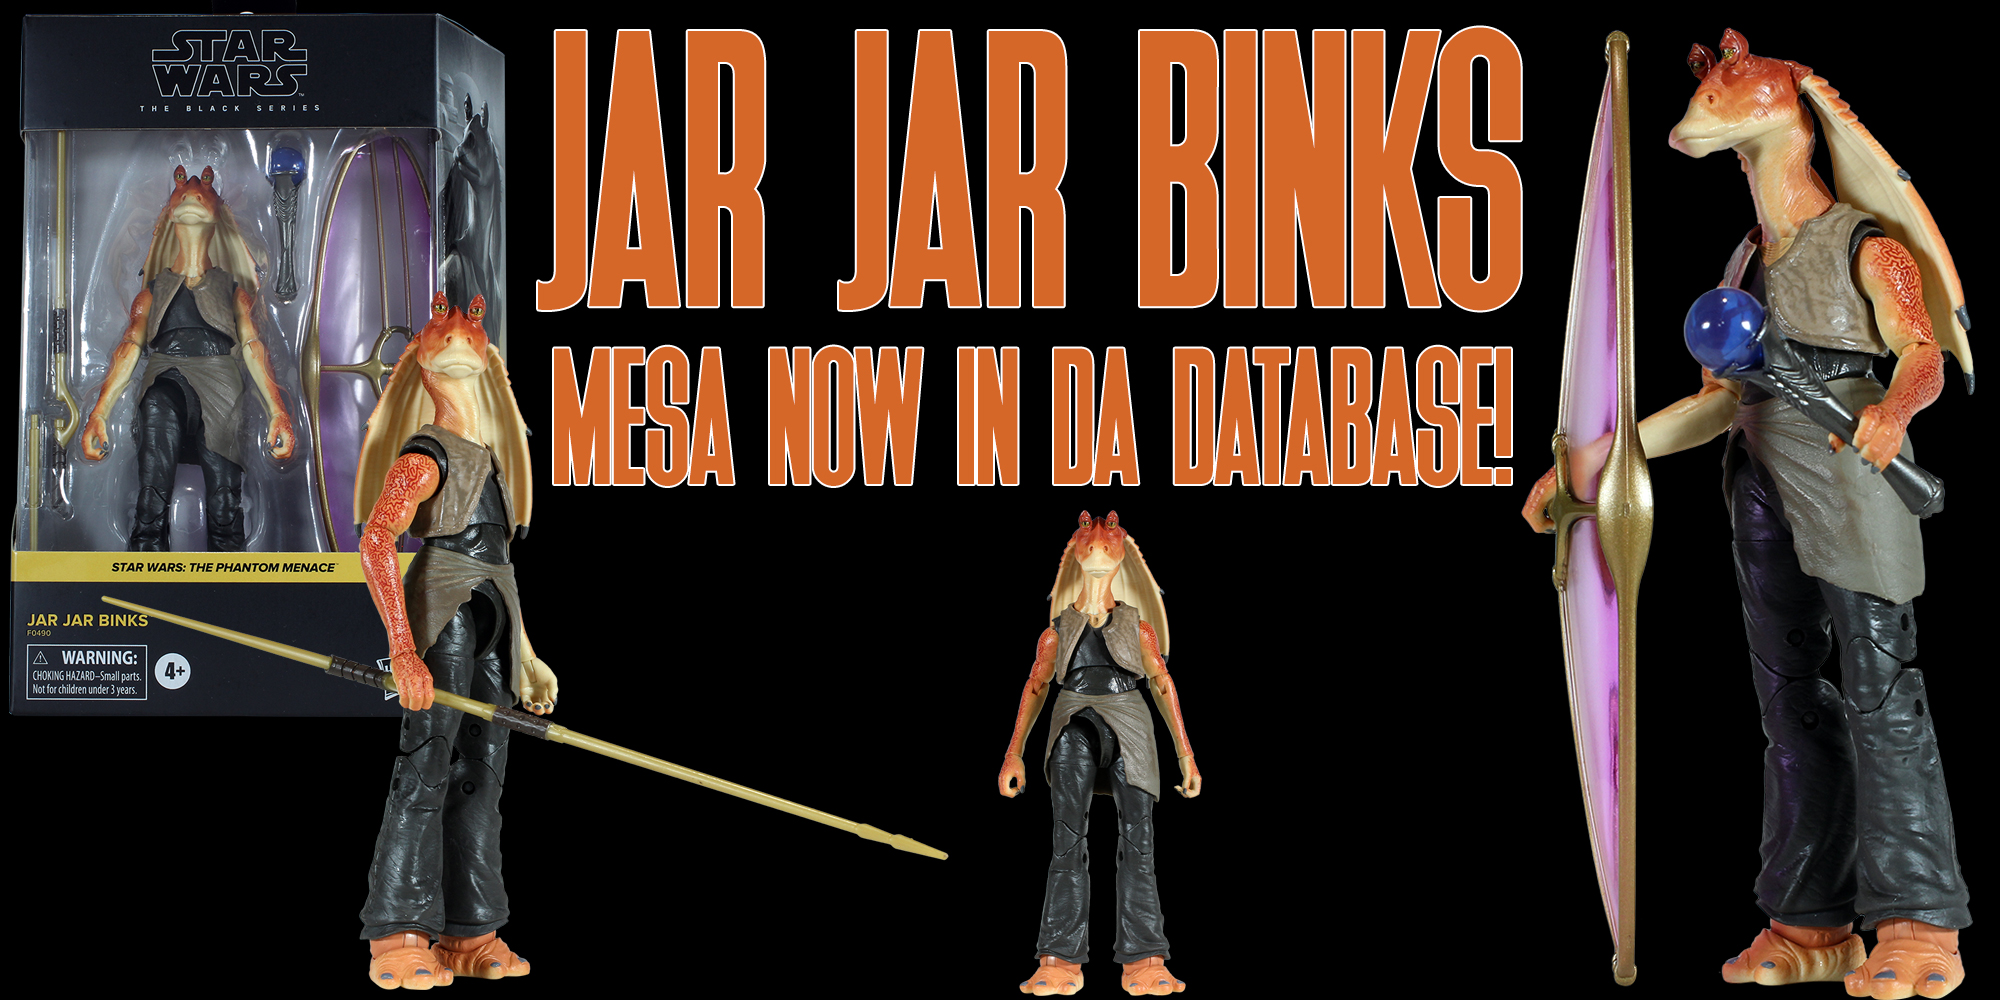 Mesa Jar Jar Binks, Mesa Now In Da Database!